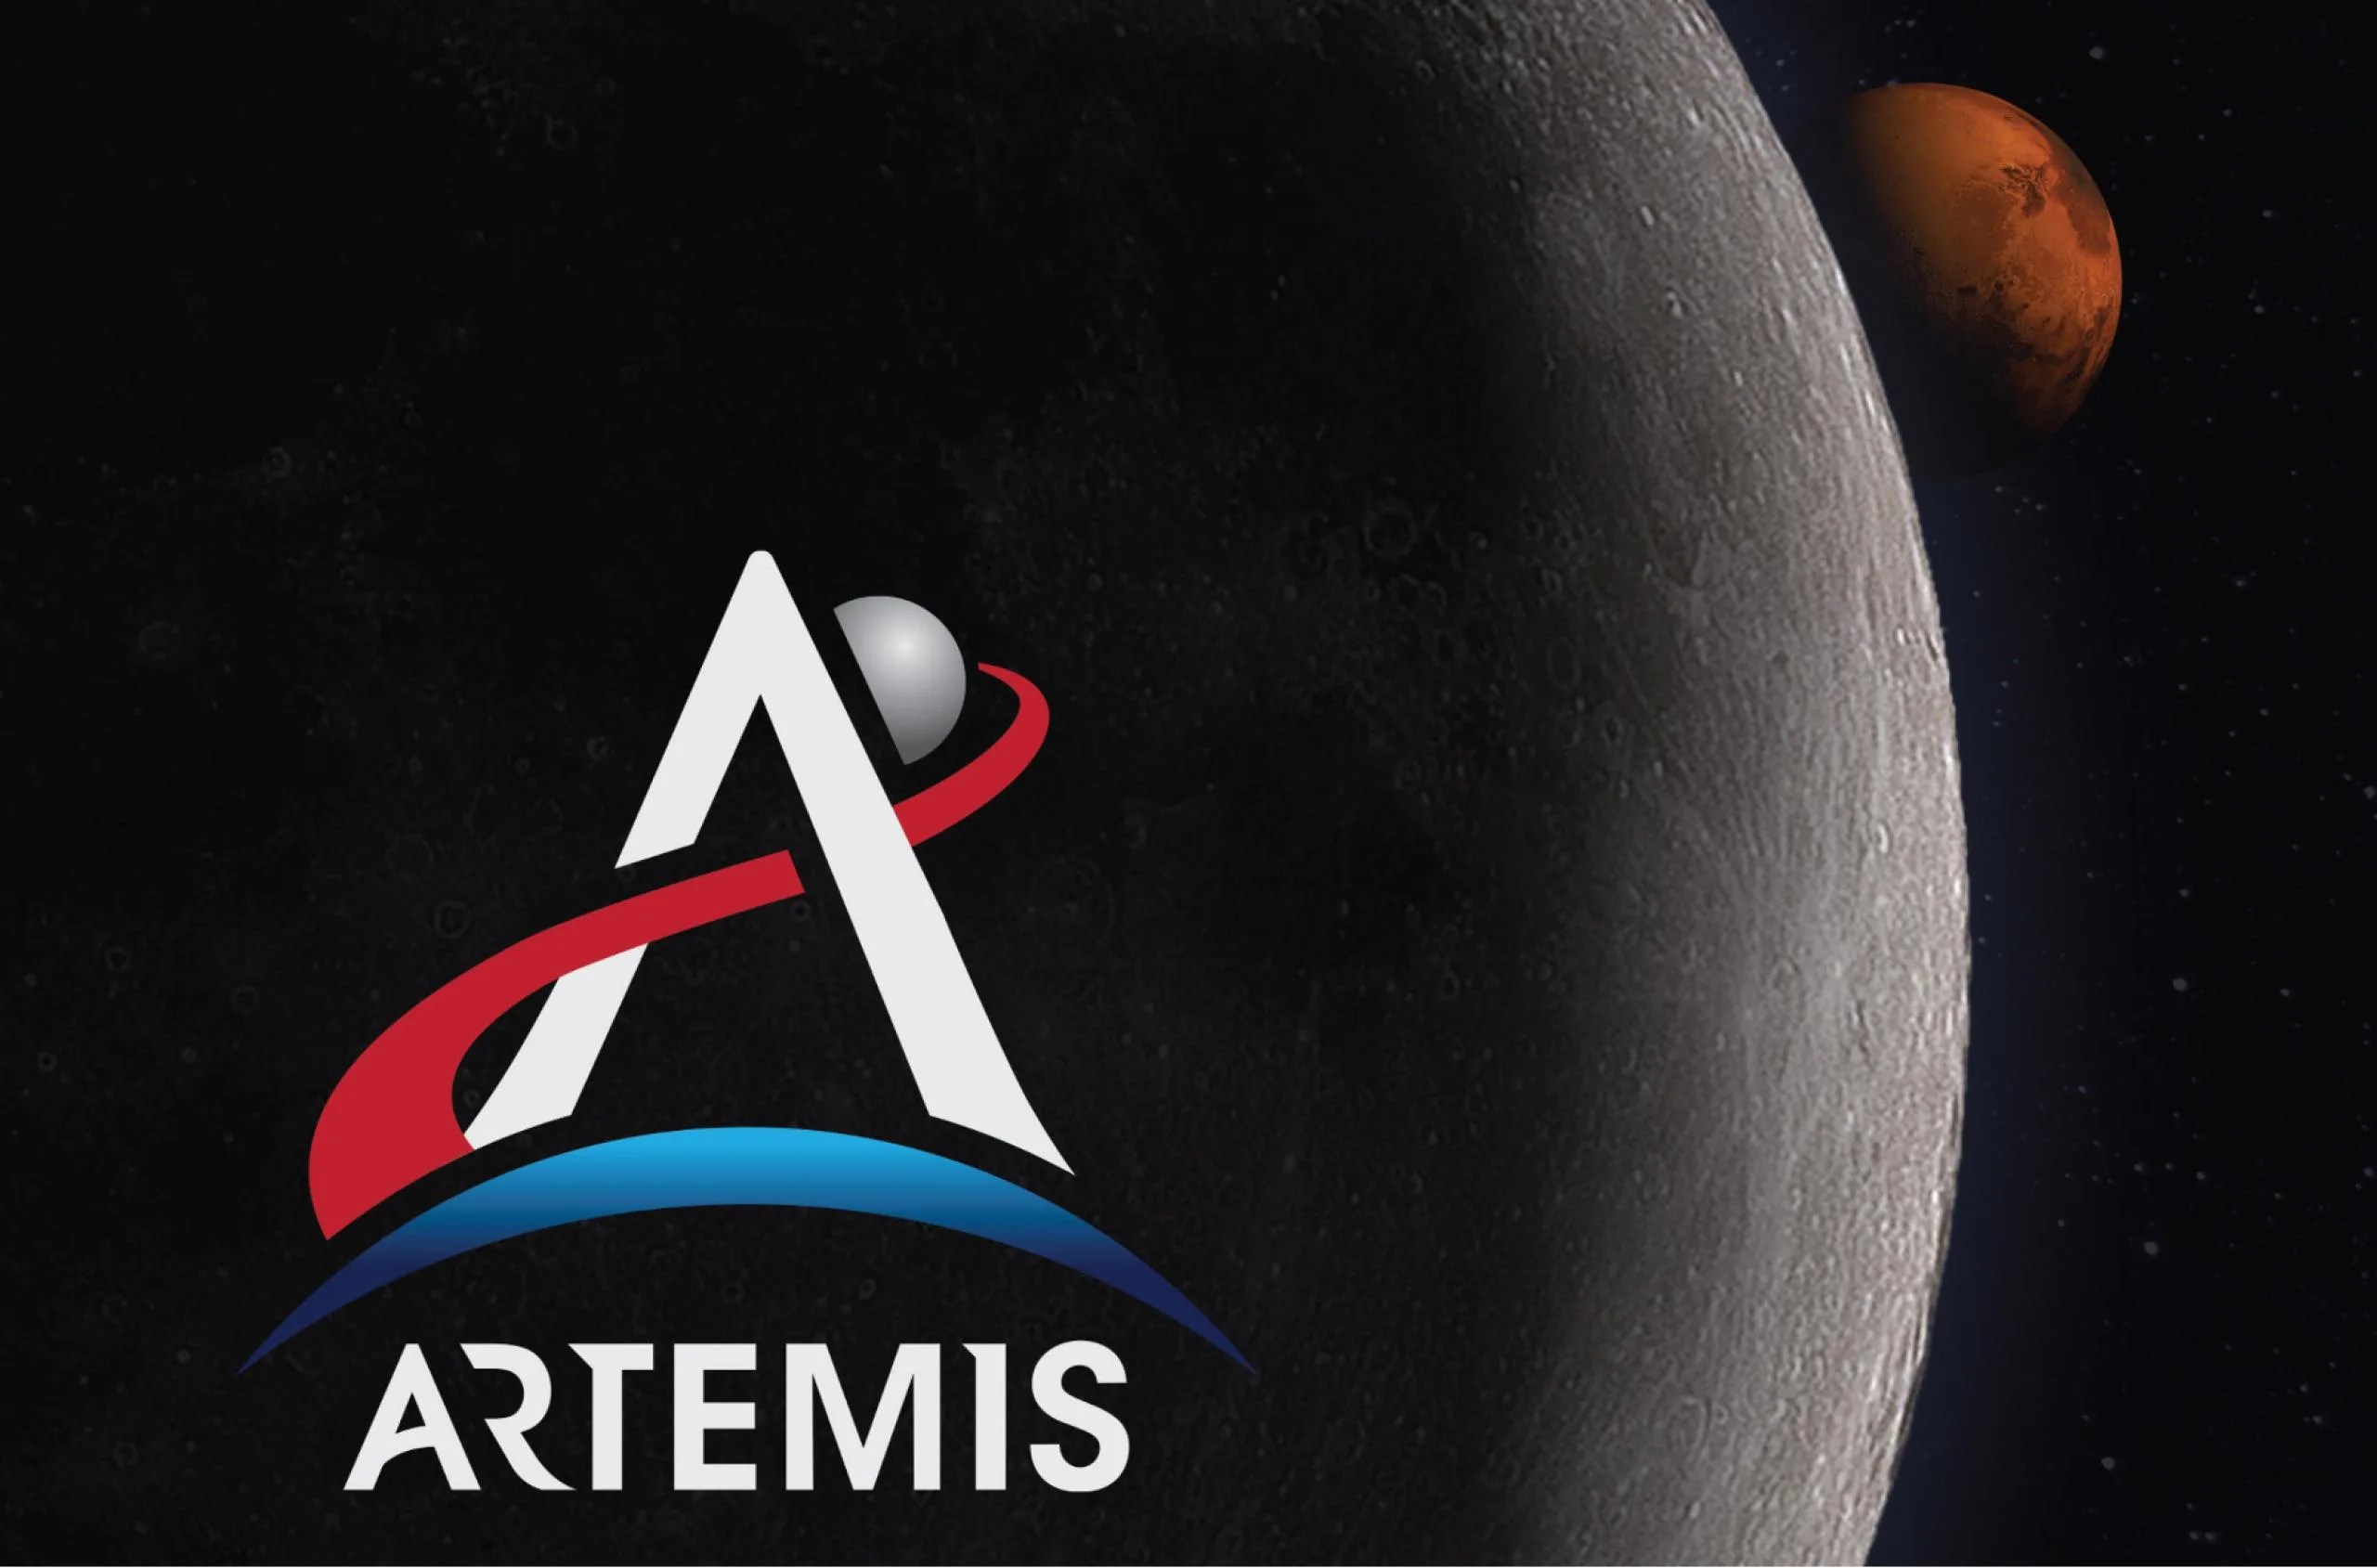 Artemis logo overlaying a grey sphere